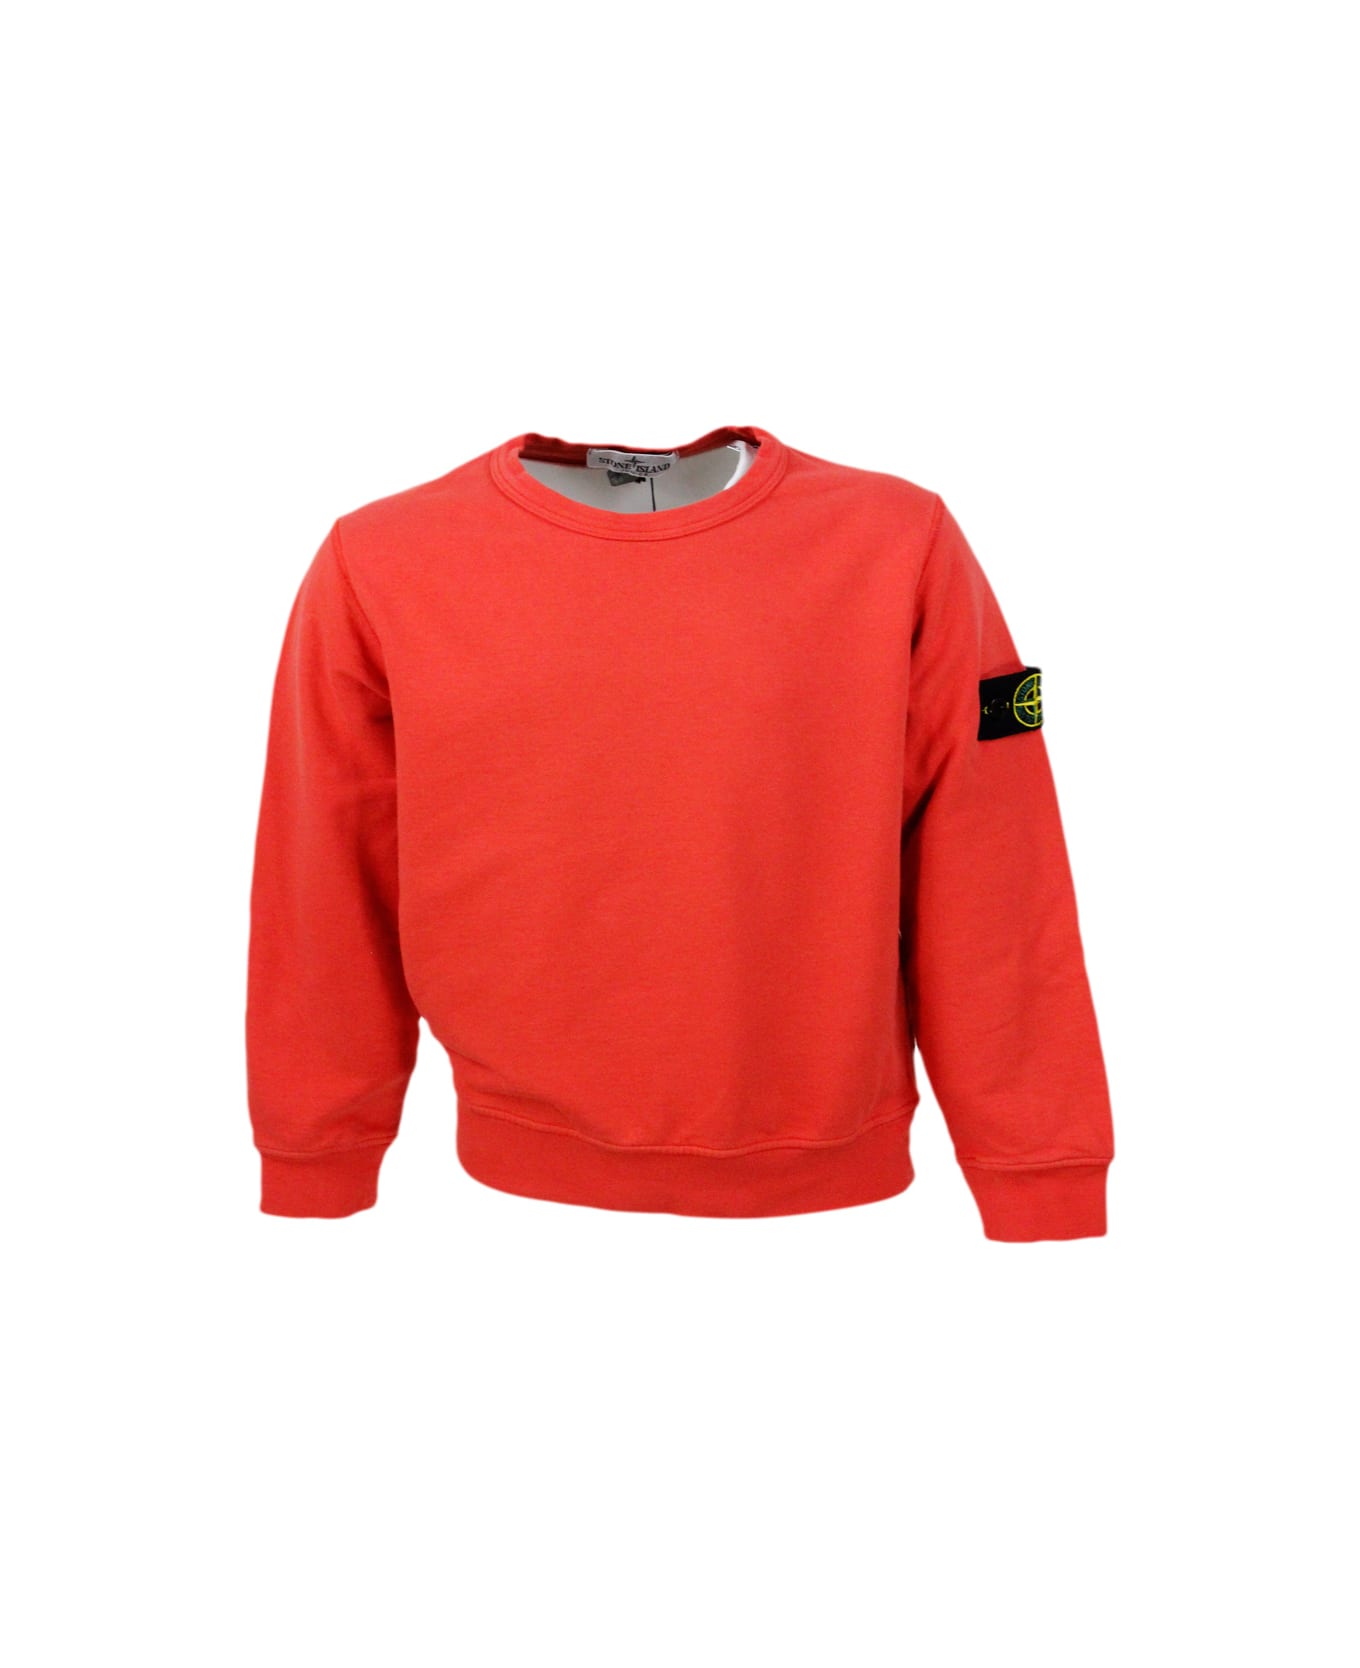 Stone Island Cotton Sweatshirt With Crew Neck And Logo On The Sleeve - Orange